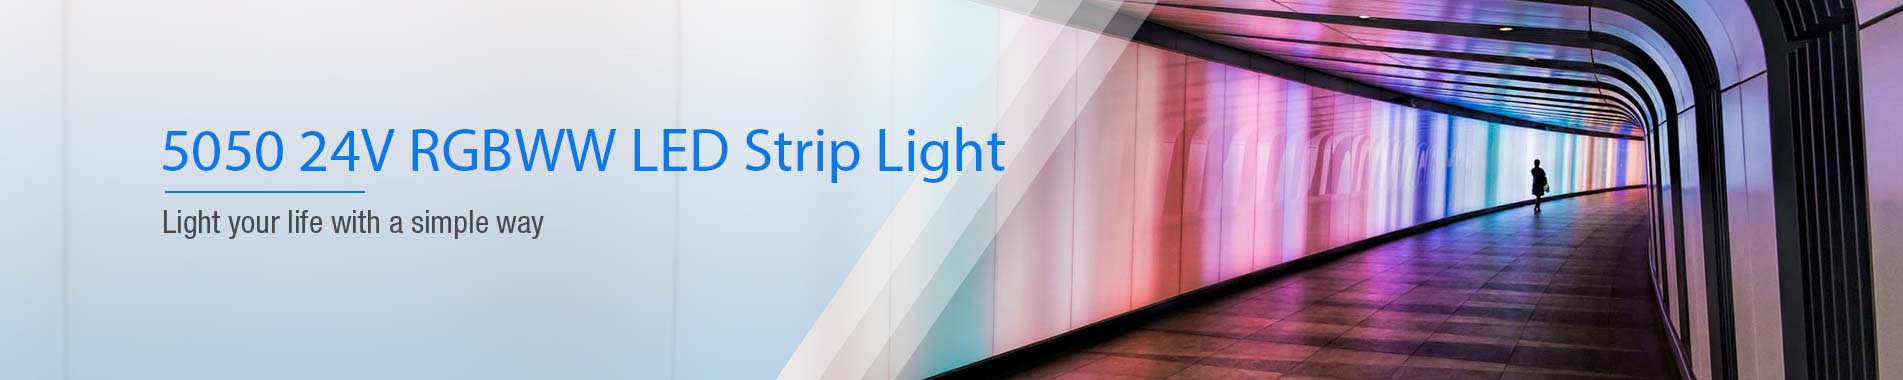 5050 RGBWW LED Strip